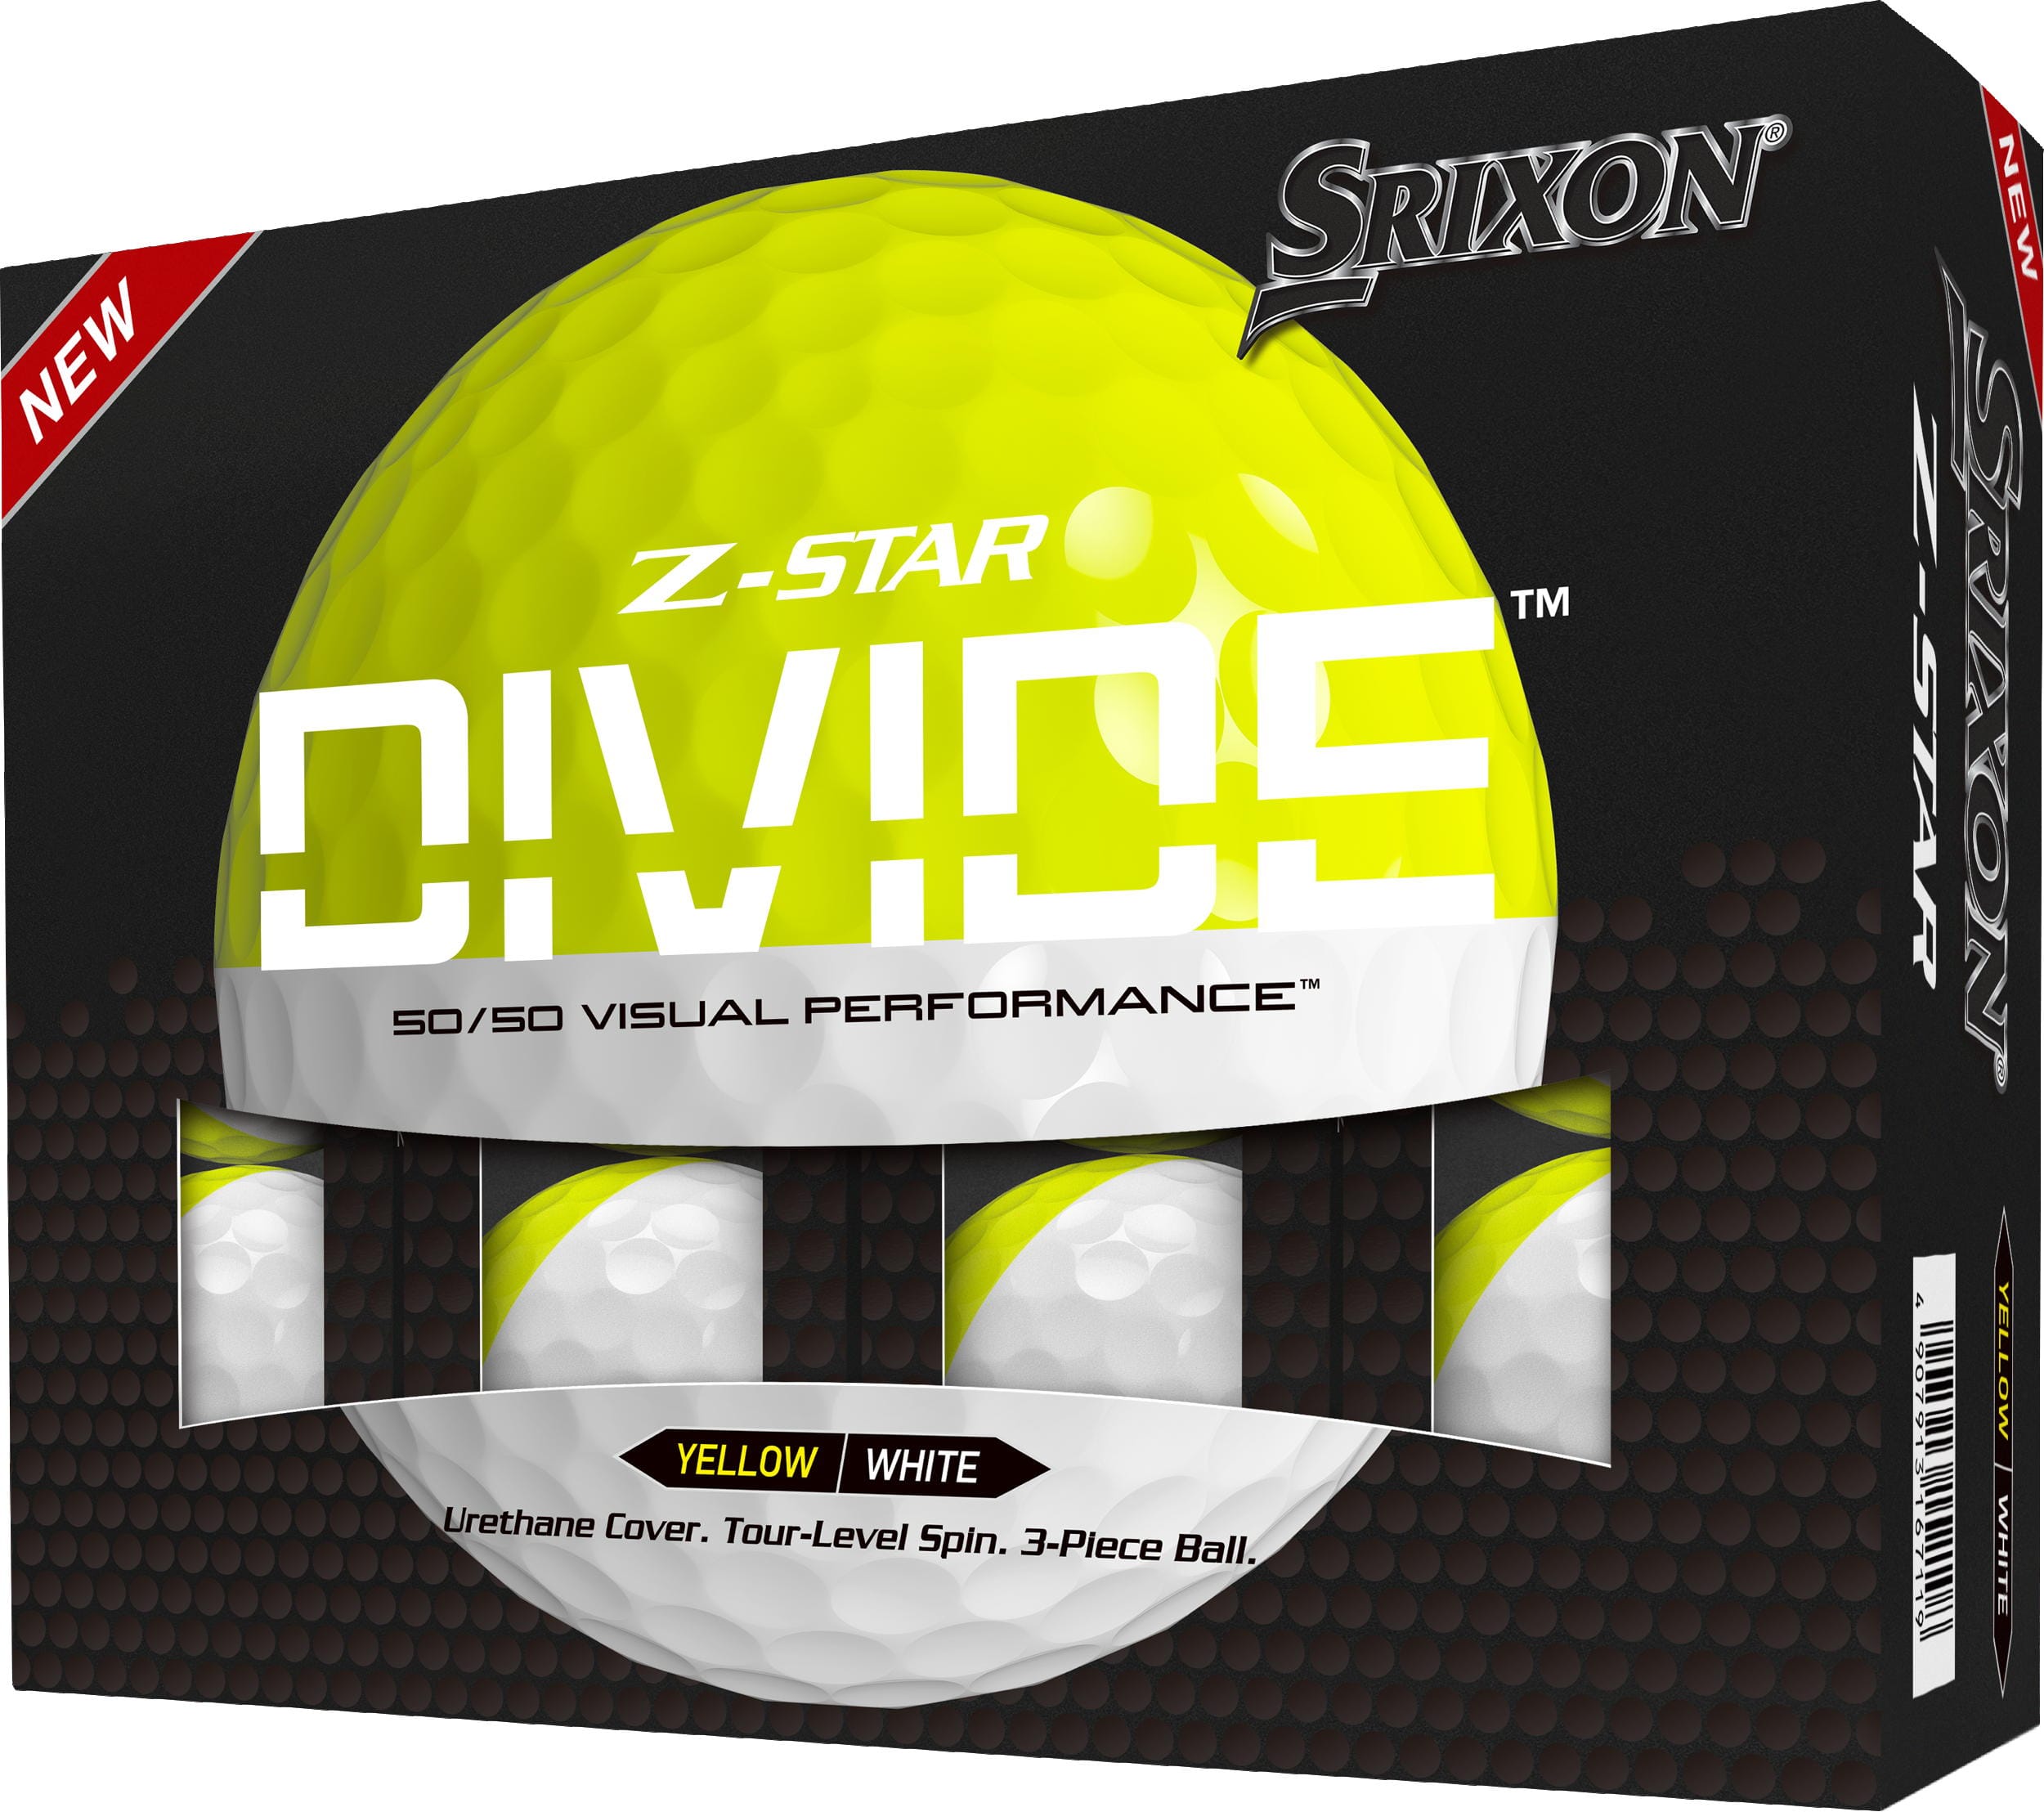 Srixon Z-STAR DIVIDE Golfbälle, white/yellow